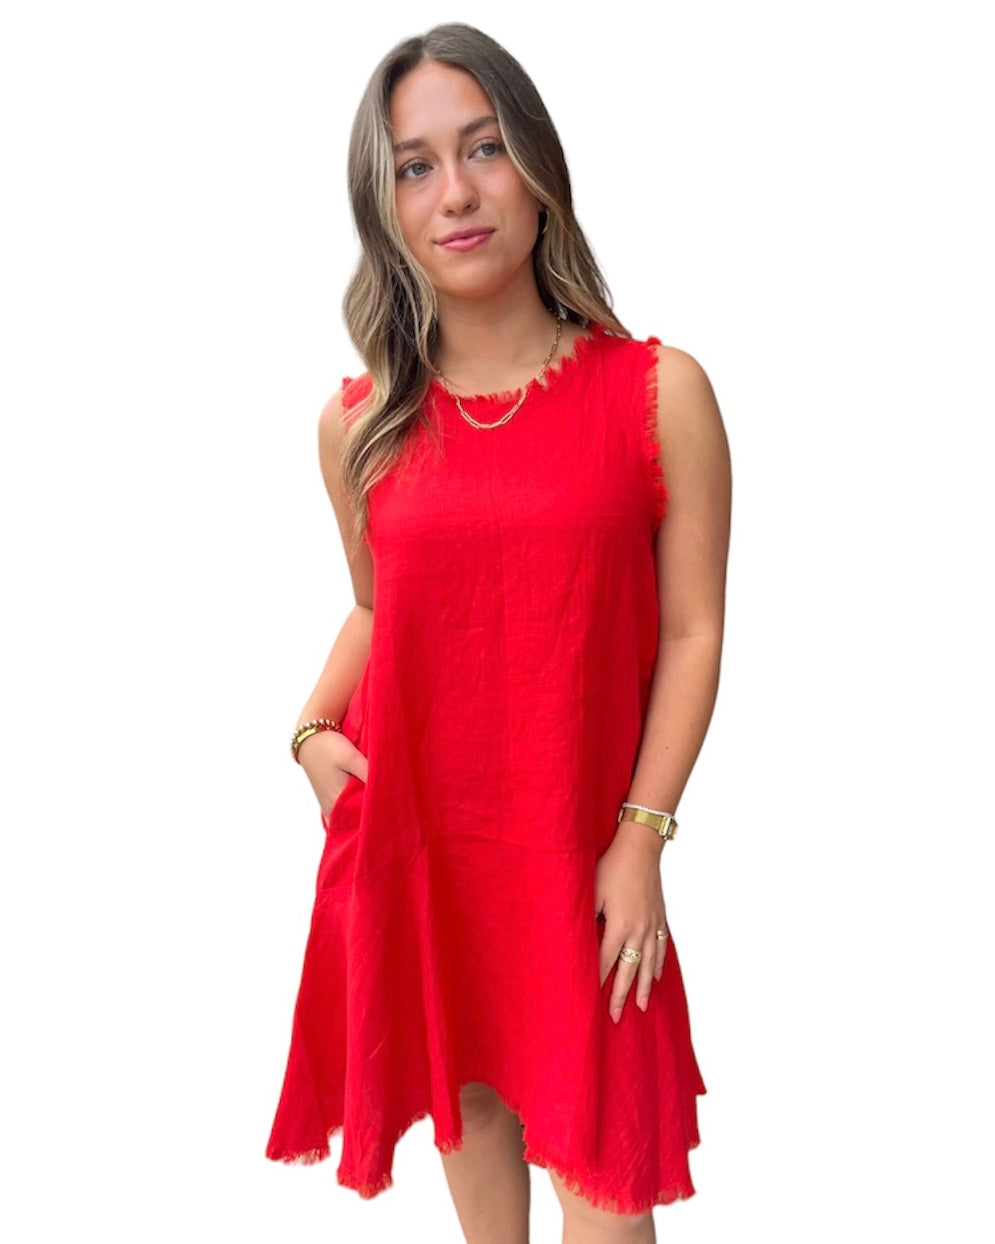 POSITANO DRESS - Red